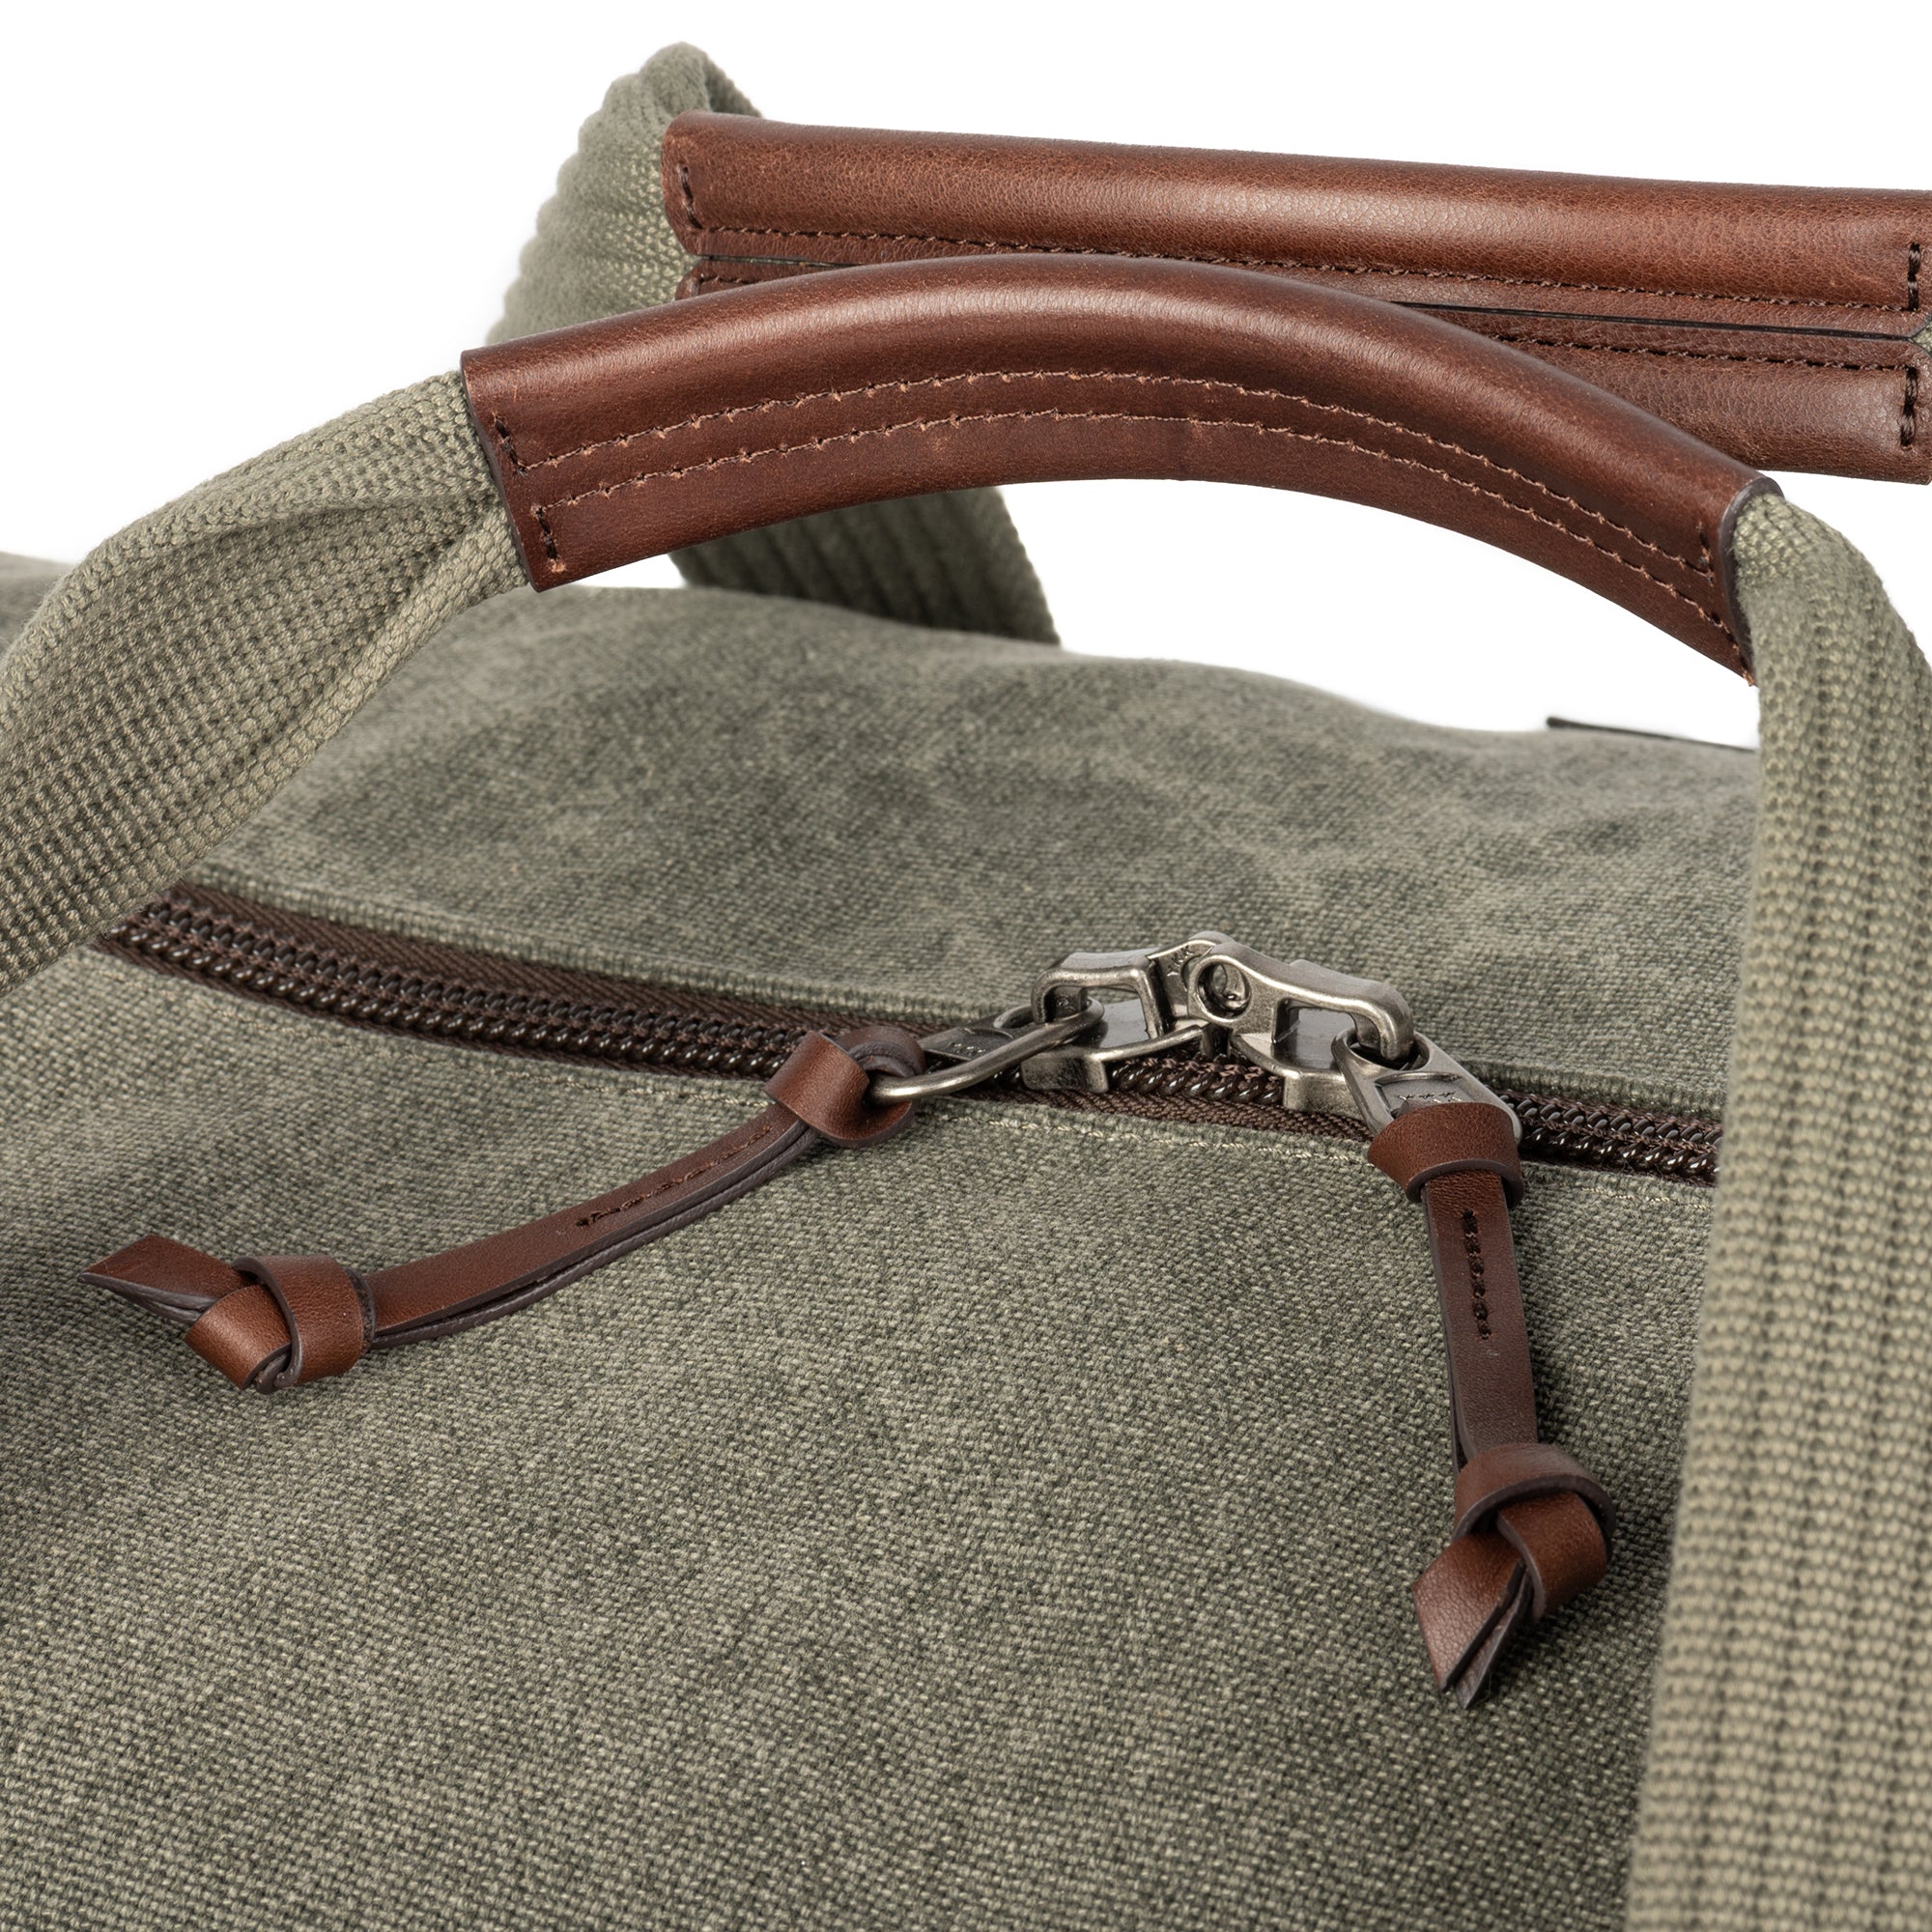 Full-grain Dakota leather zipper pulls